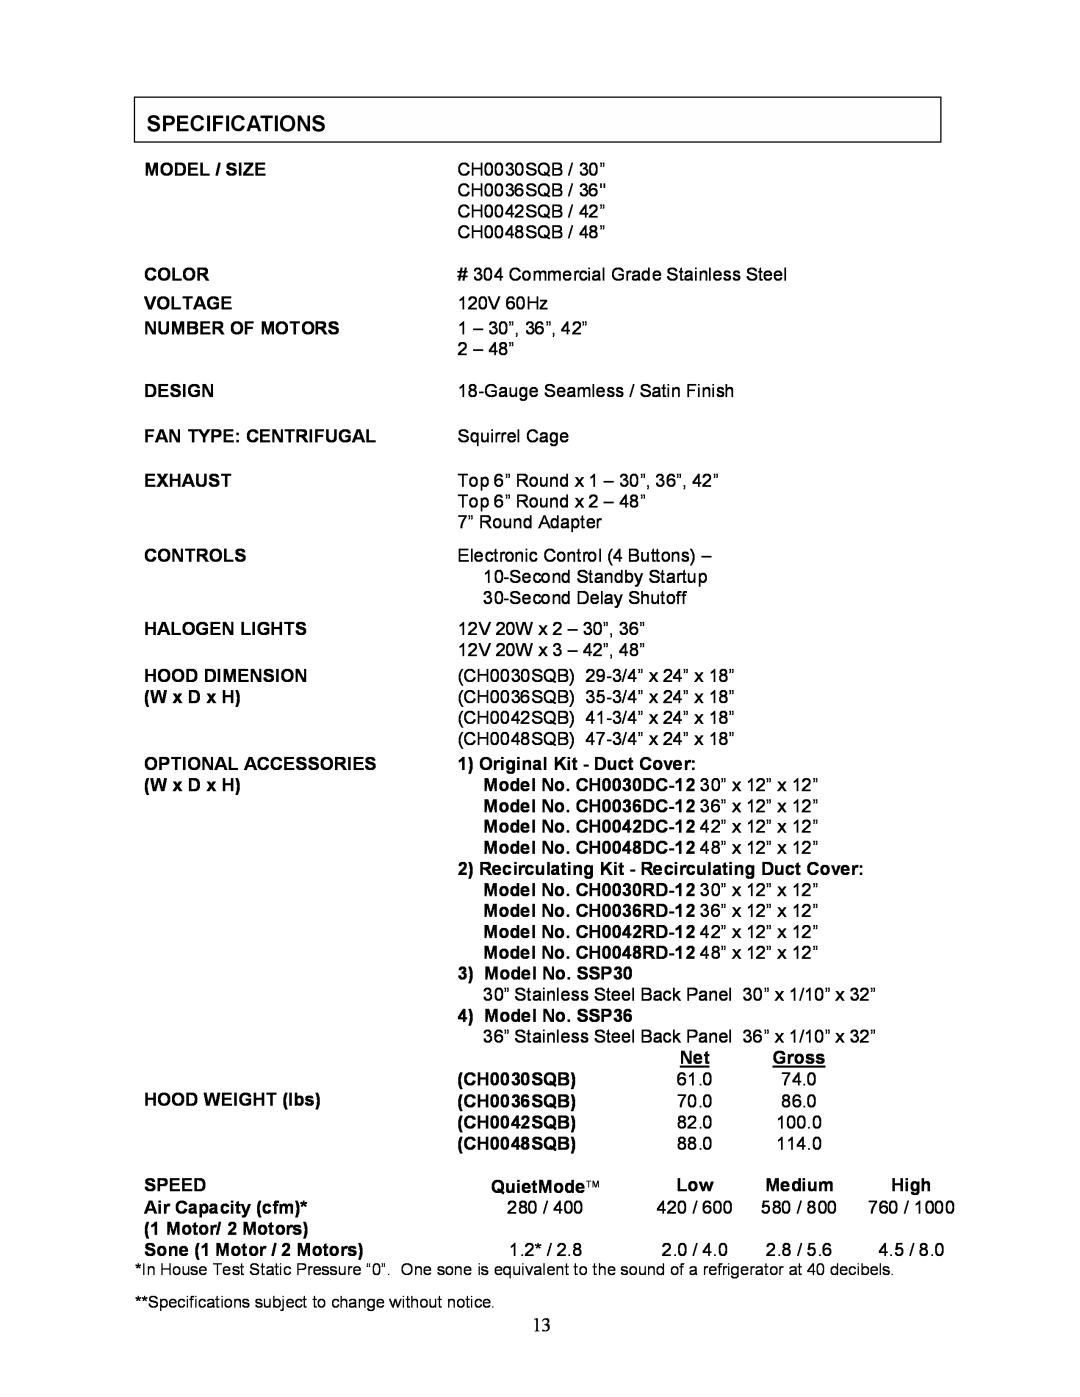 Kobe Range Hoods CH0030SQB manual Specifications, # 304 Commercial Grade Stainless Steel, 30 x 1/10, 36 x 1/10 x, Medium 